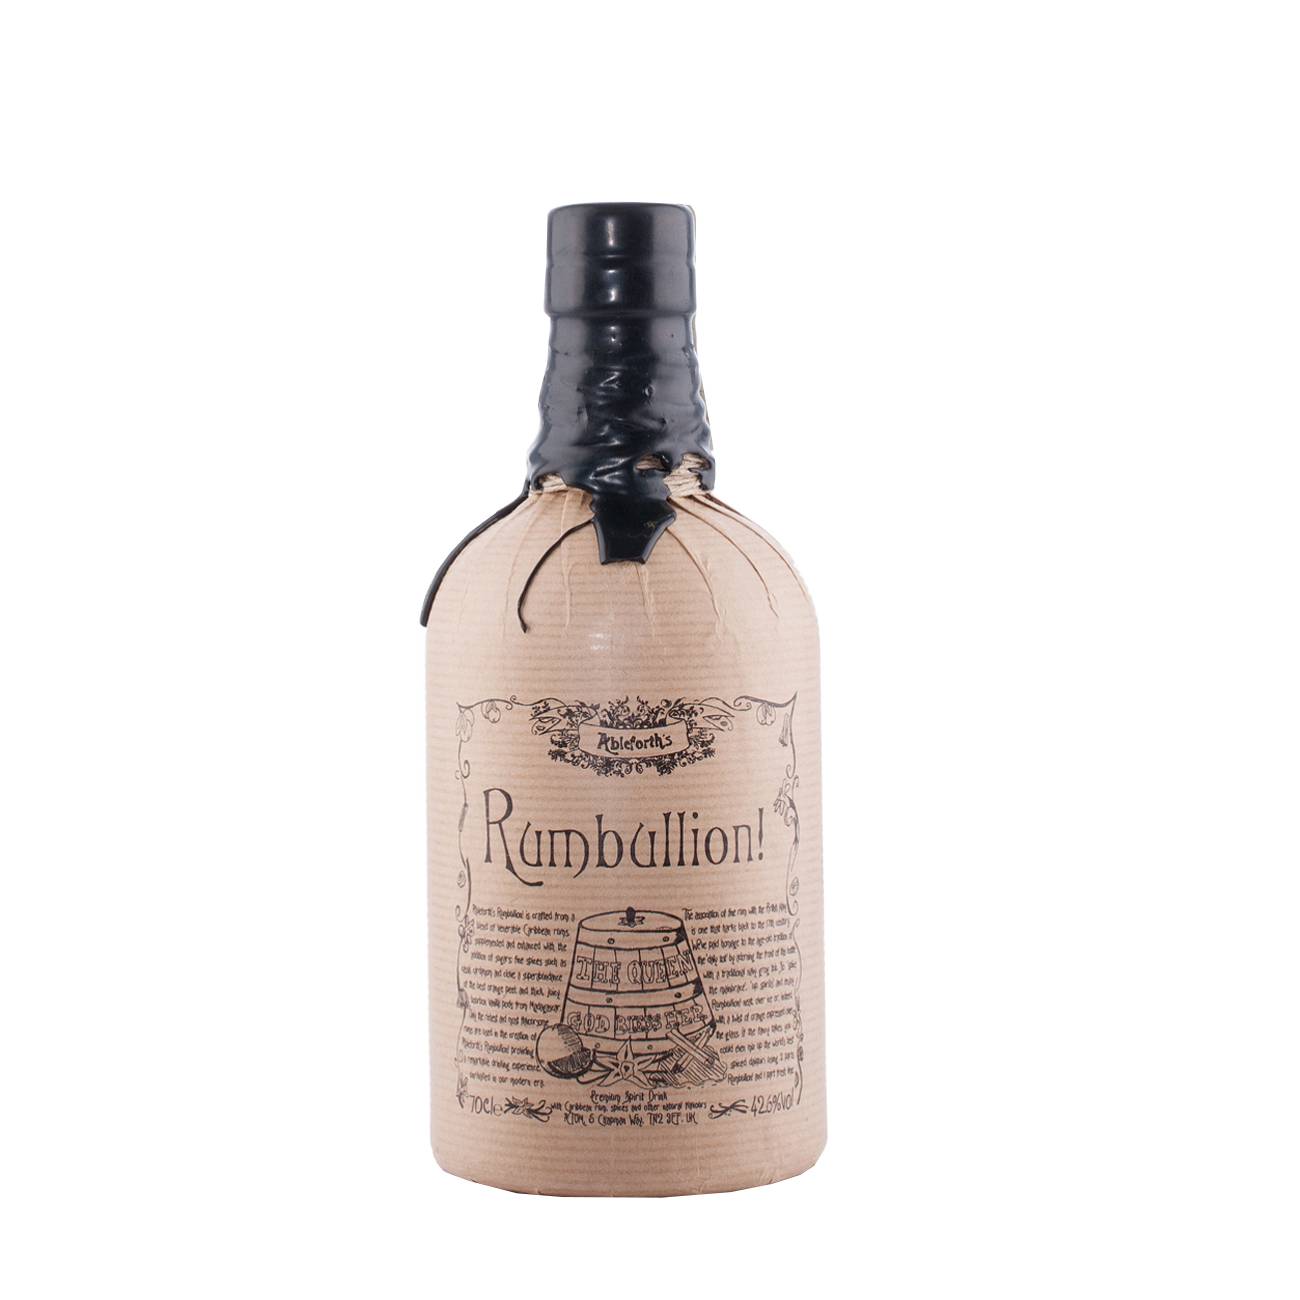 Rumbullion Rum bestvalue.eu